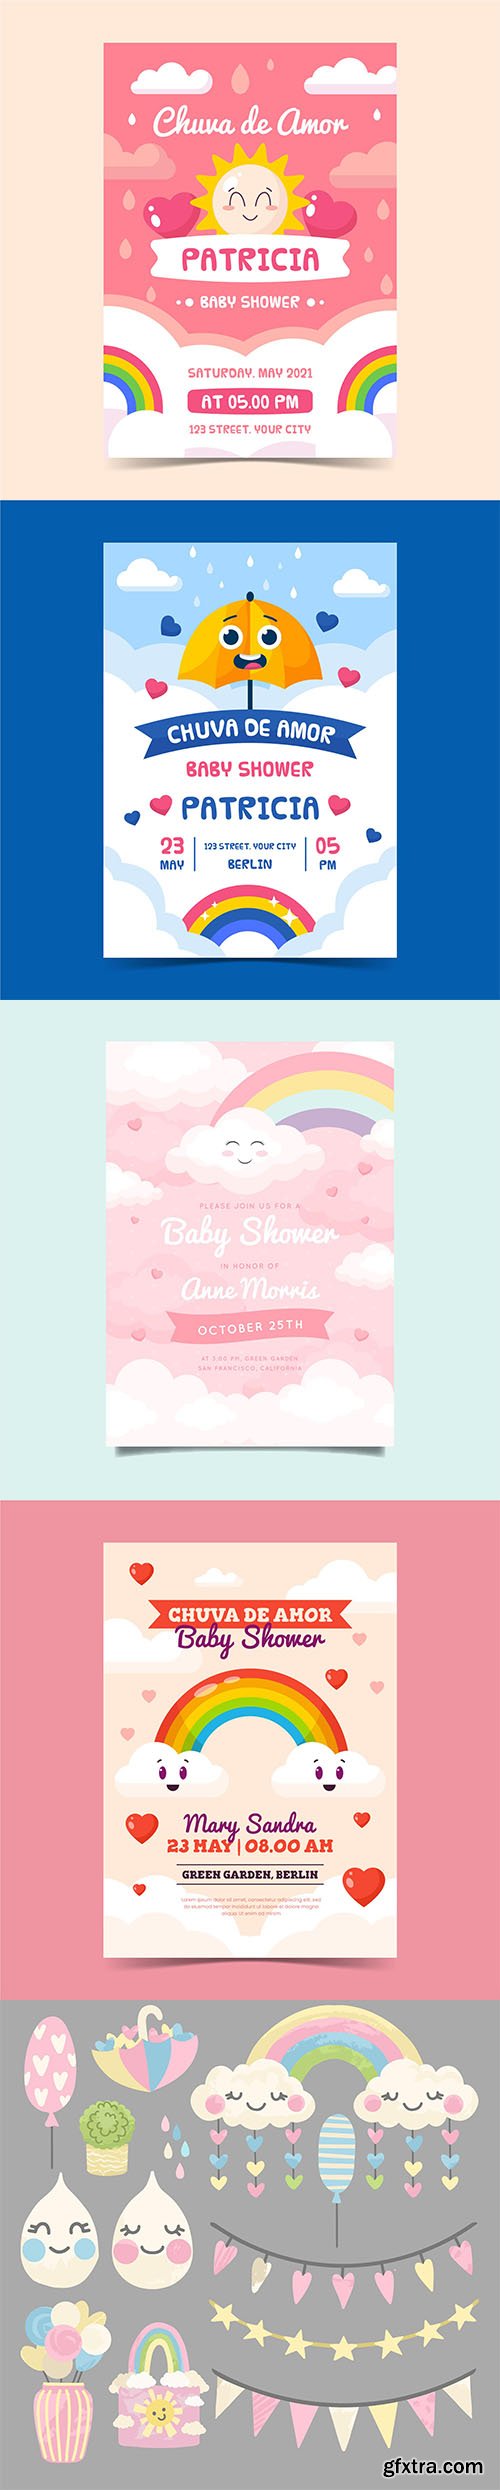 Chuva de amor baby shower card+bonus